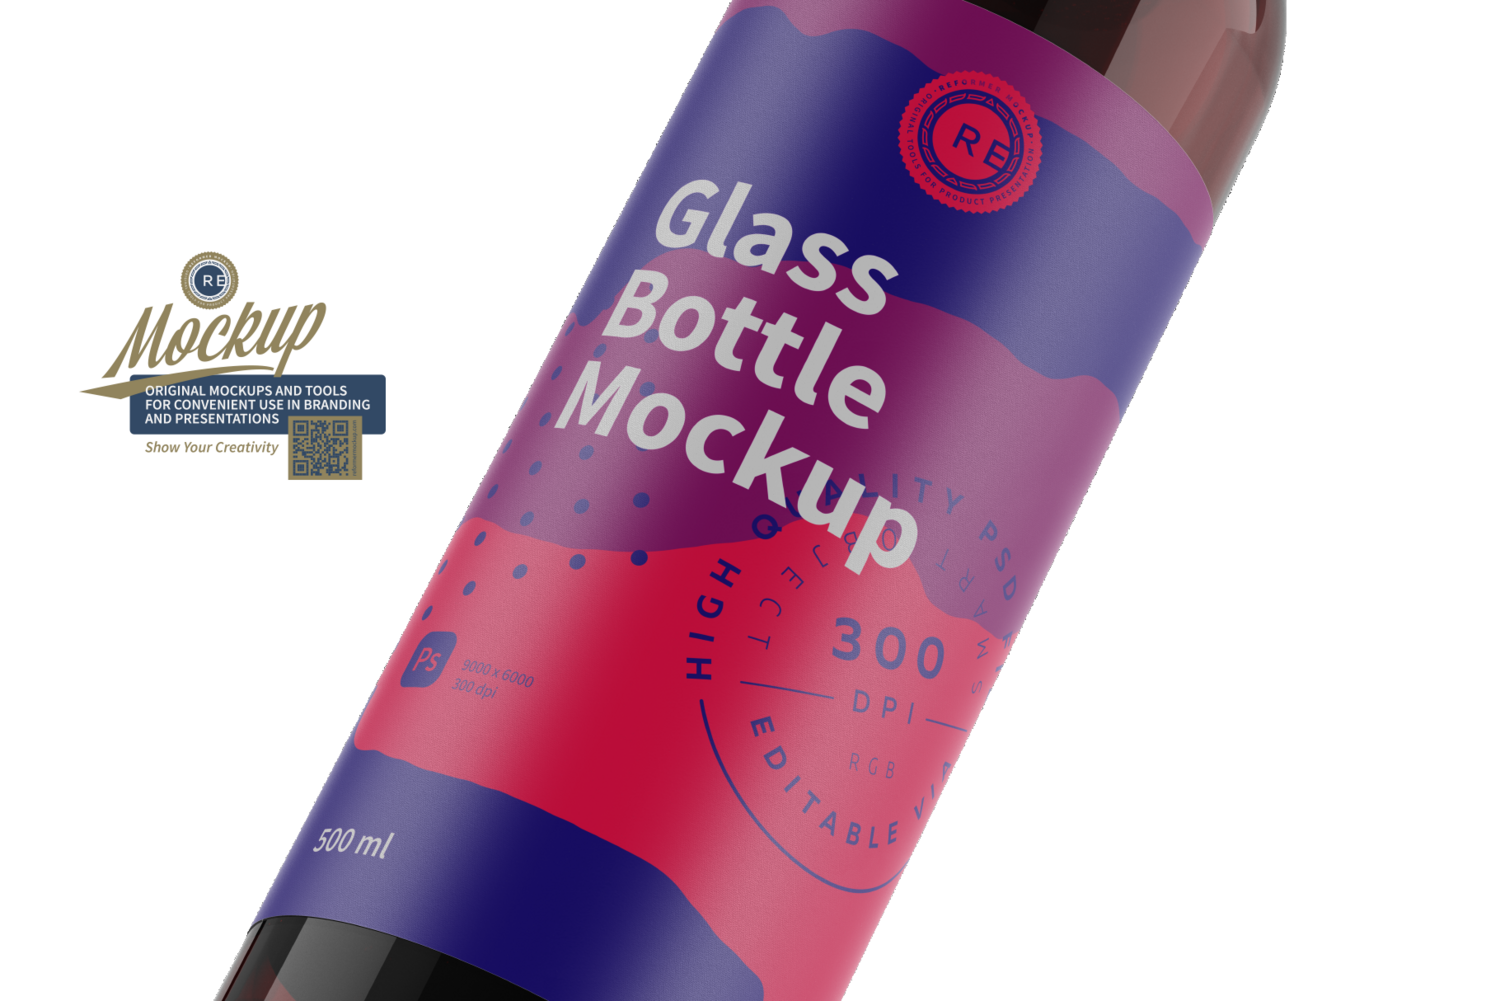 Glass Bottle Mockup